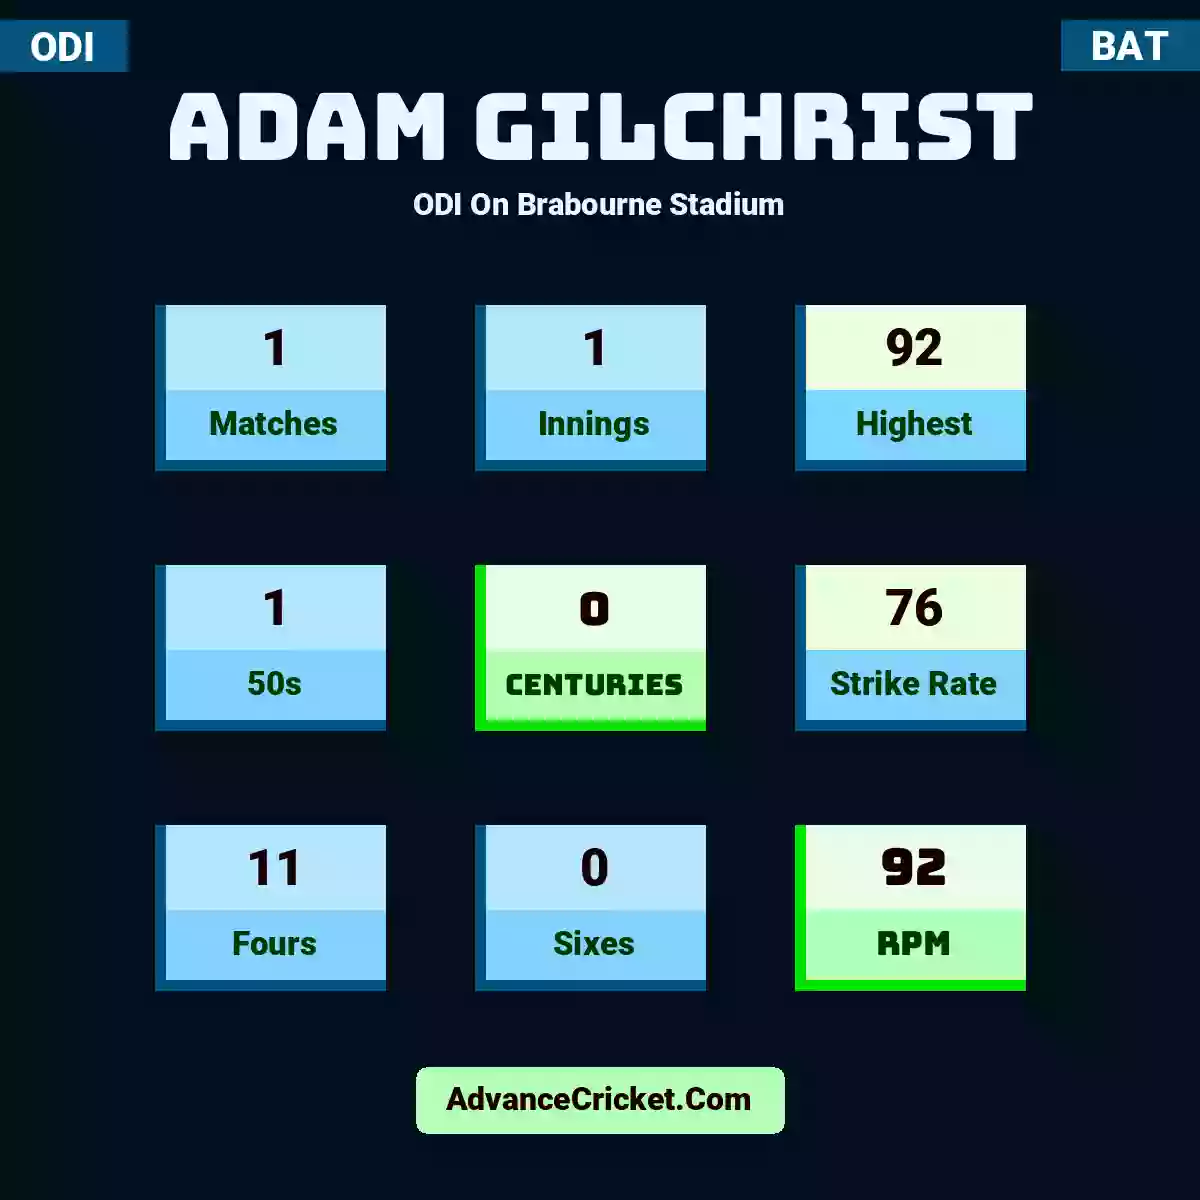 Adam Gilchrist ODI  On Brabourne Stadium, Adam Gilchrist played 1 matches, scored 92 runs as highest, 1 half-centuries, and 0 centuries, with a strike rate of 76. A.Gilchrist hit 11 fours and 0 sixes, with an RPM of 92.